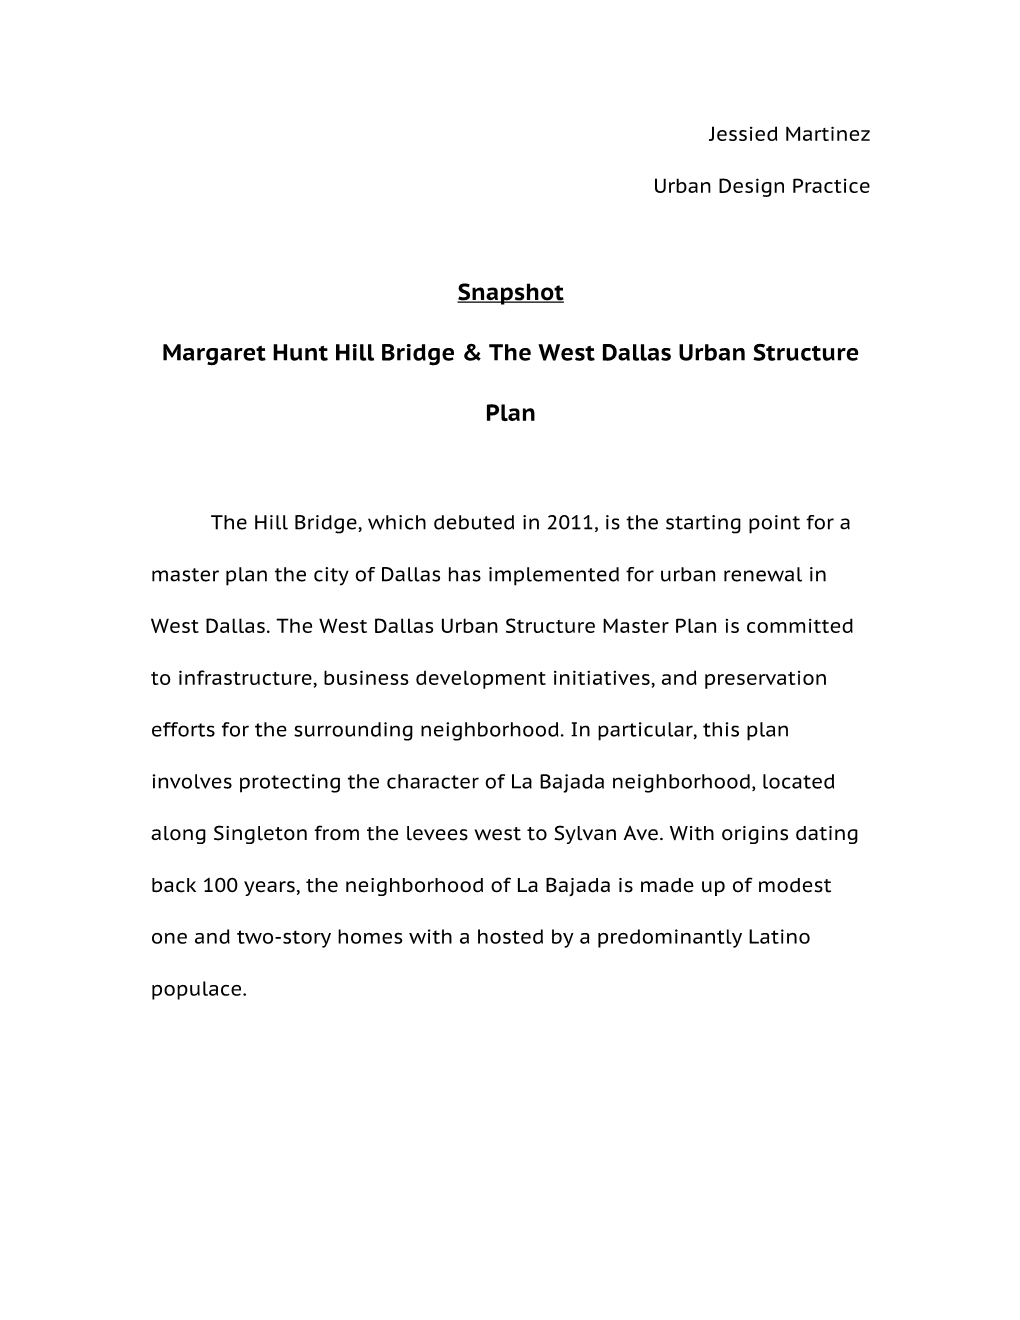 Snapshot Margaret Hunt Hill Bridge & the West Dallas Urban Structure Plan